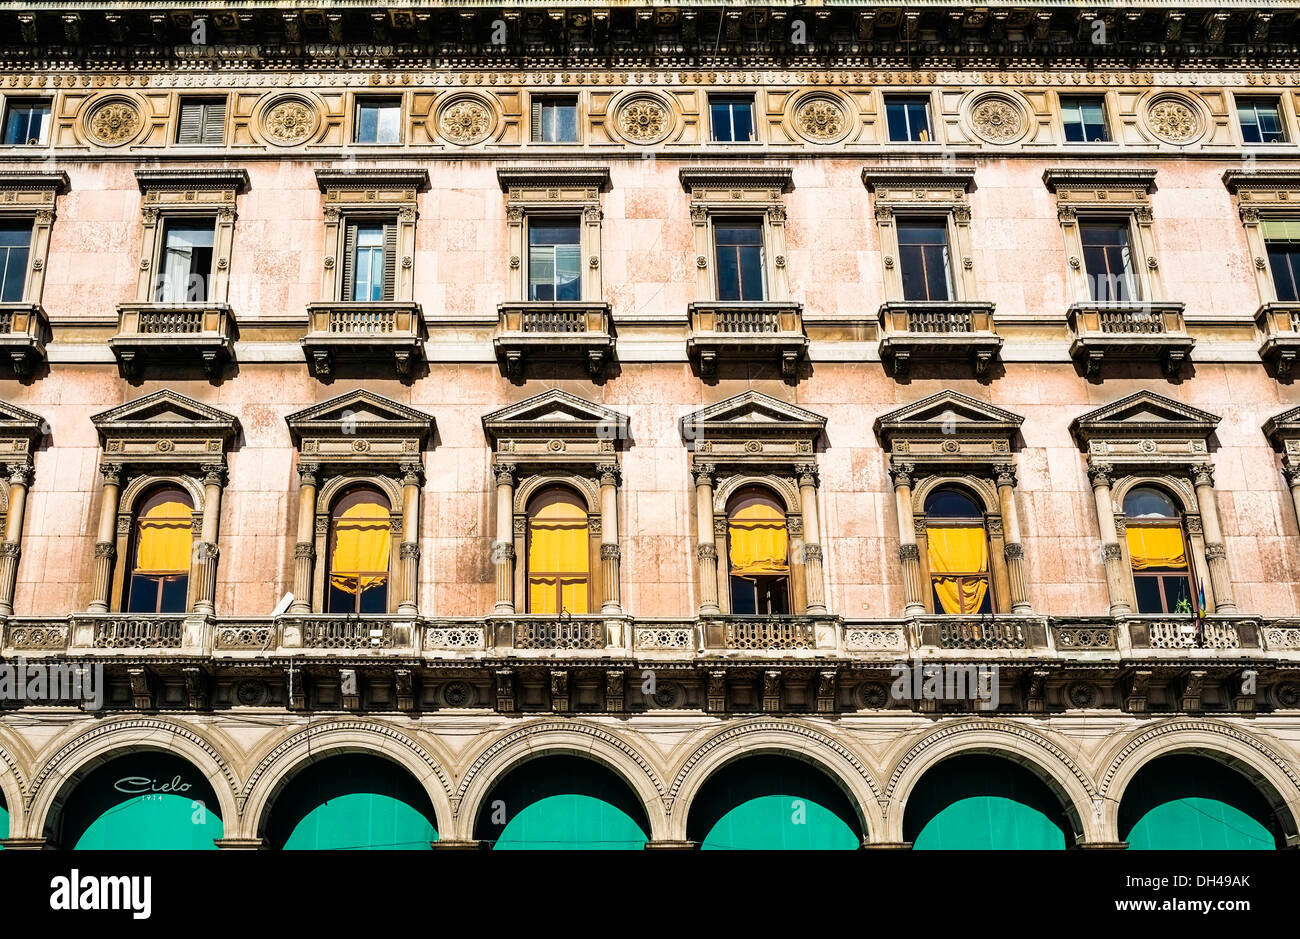 Historic building in Piazza duomo, Milan, Italy Stock Photo